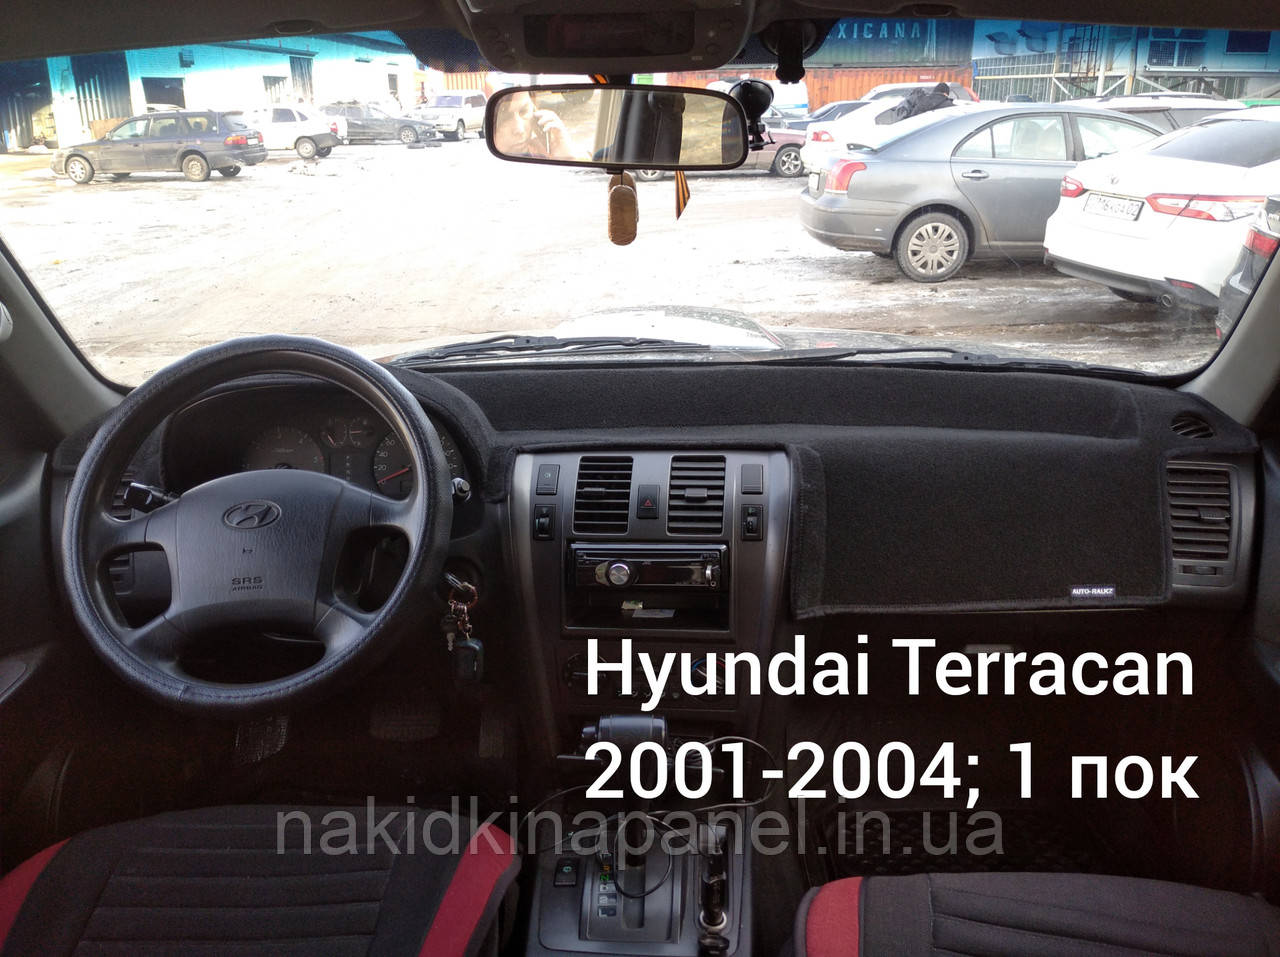 Накидка на панель приладів HYUNDAI Terracan,  2001-2004